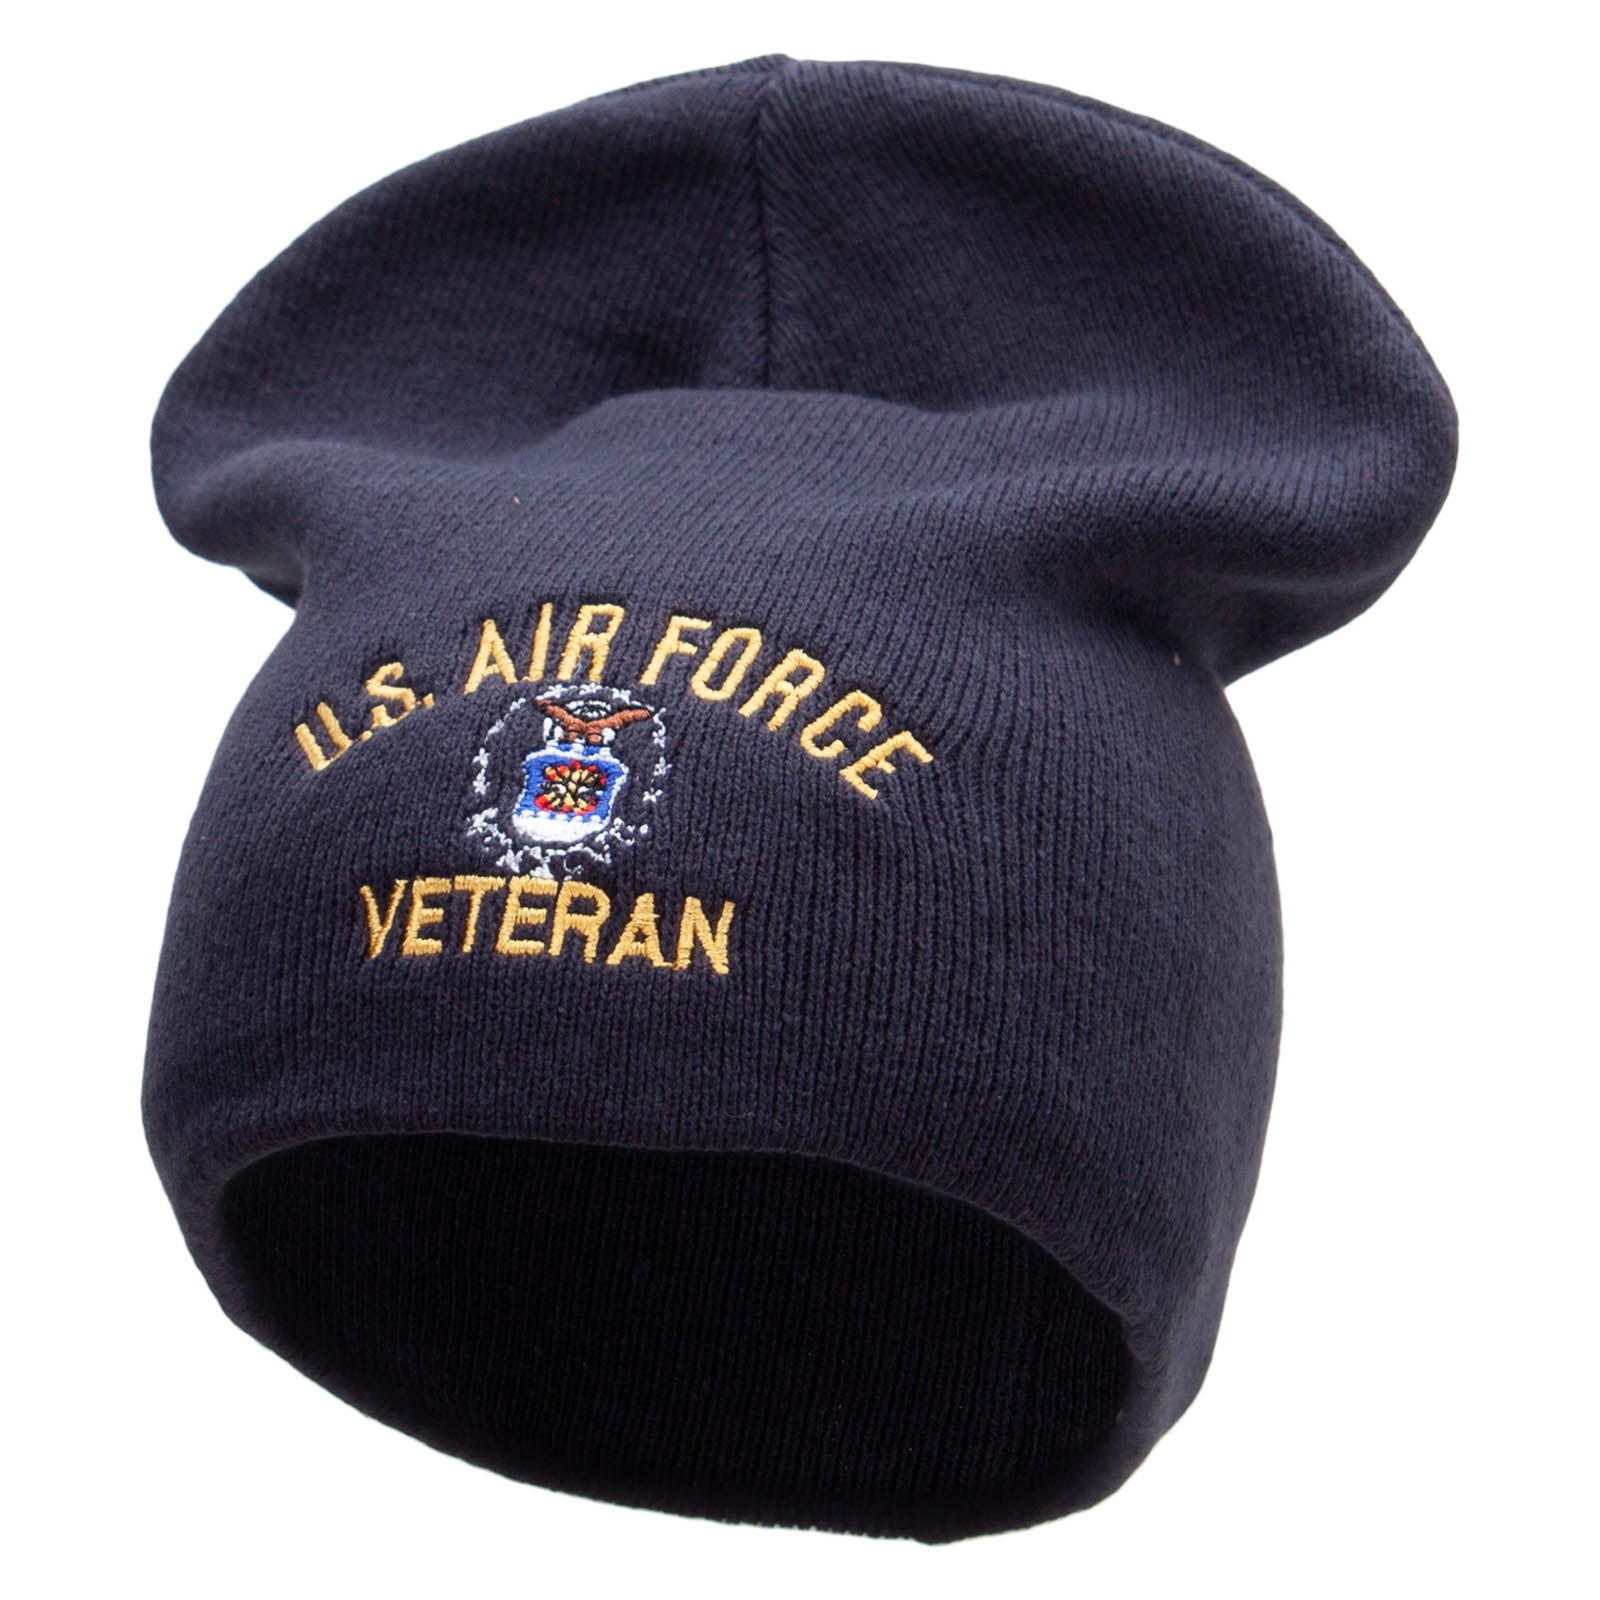 US Air Force Veteran Big Size Superior Cotton Short Knit Beanie - Navy XL-3XL